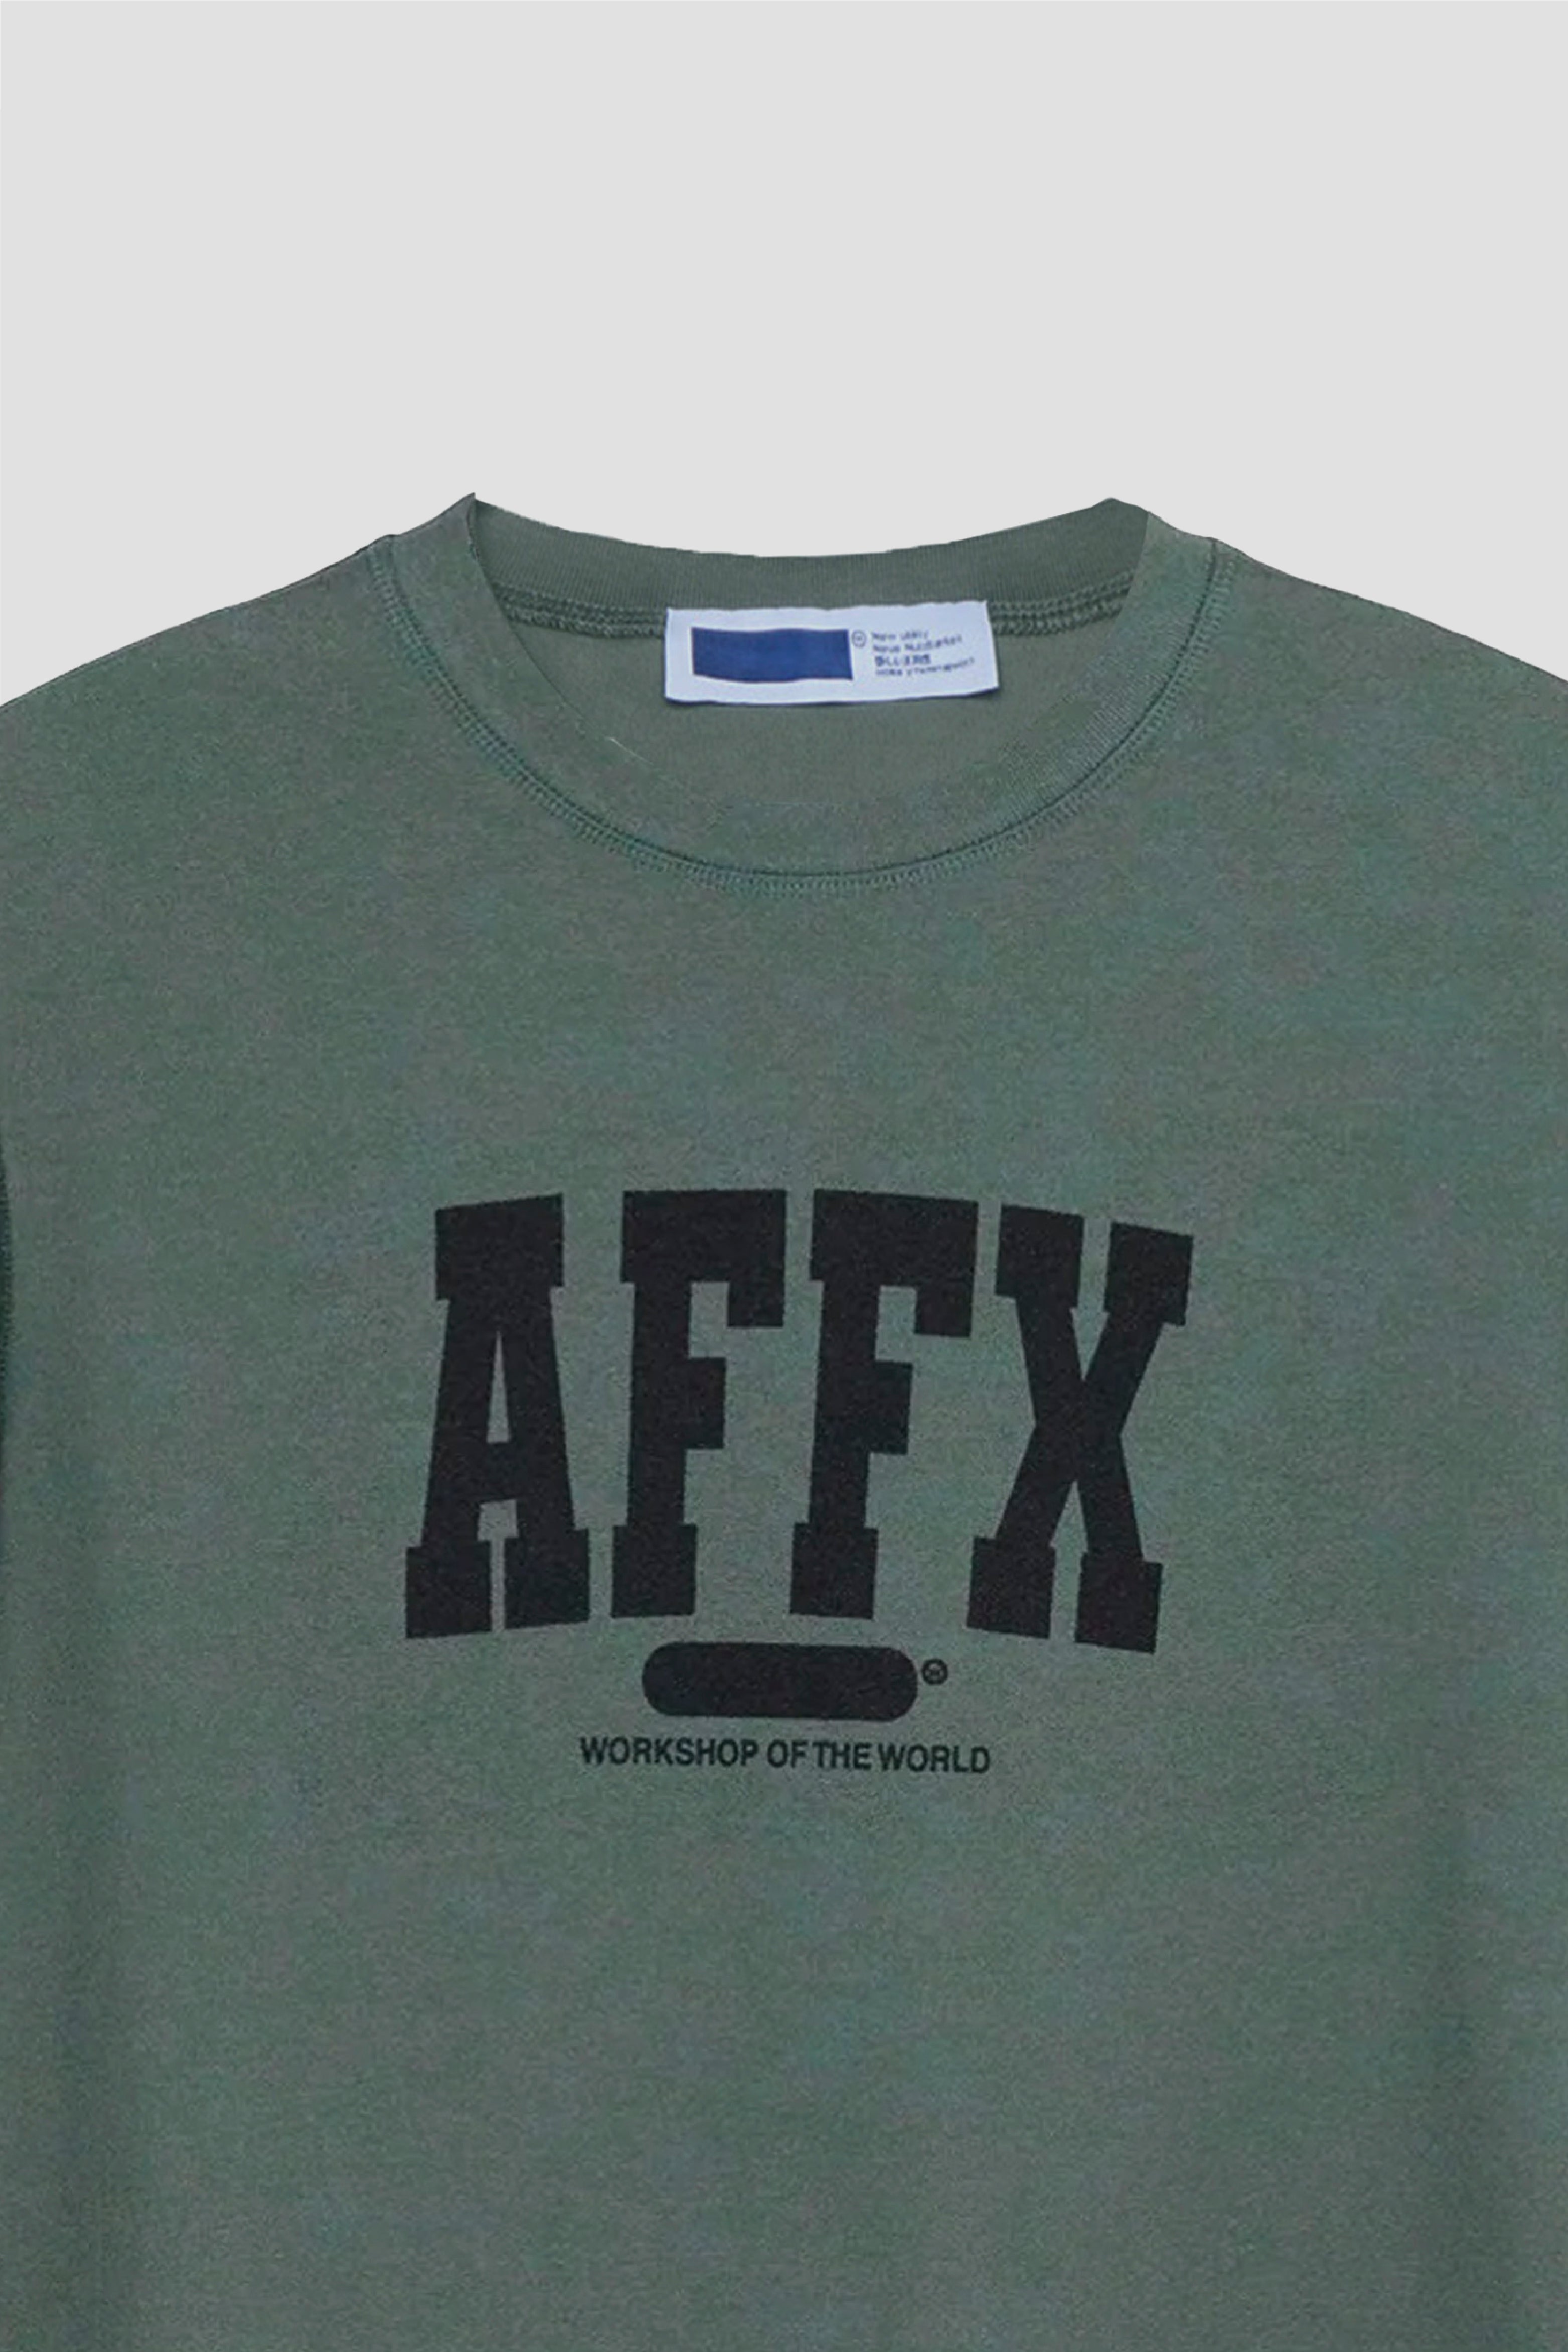 Selectshop FRAME - AFFXWRKS Varsity Tee T-Shirts Concept Store Dubai